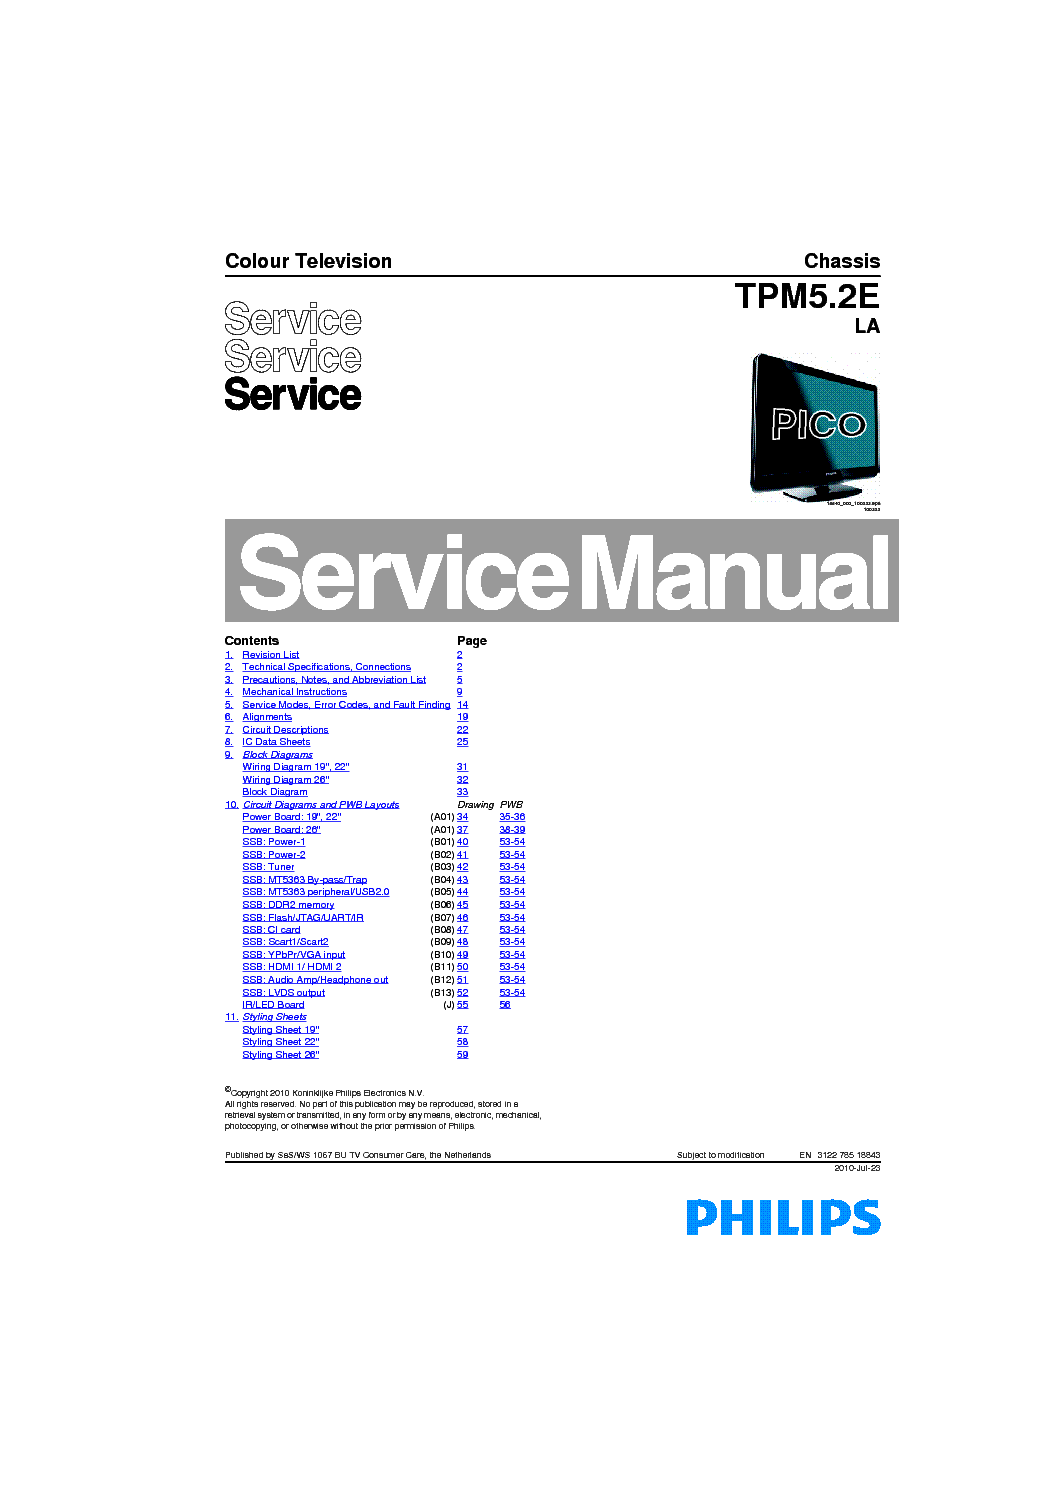 PHILIPS CHASSIS TPM5 2E LA service manual (1st page)